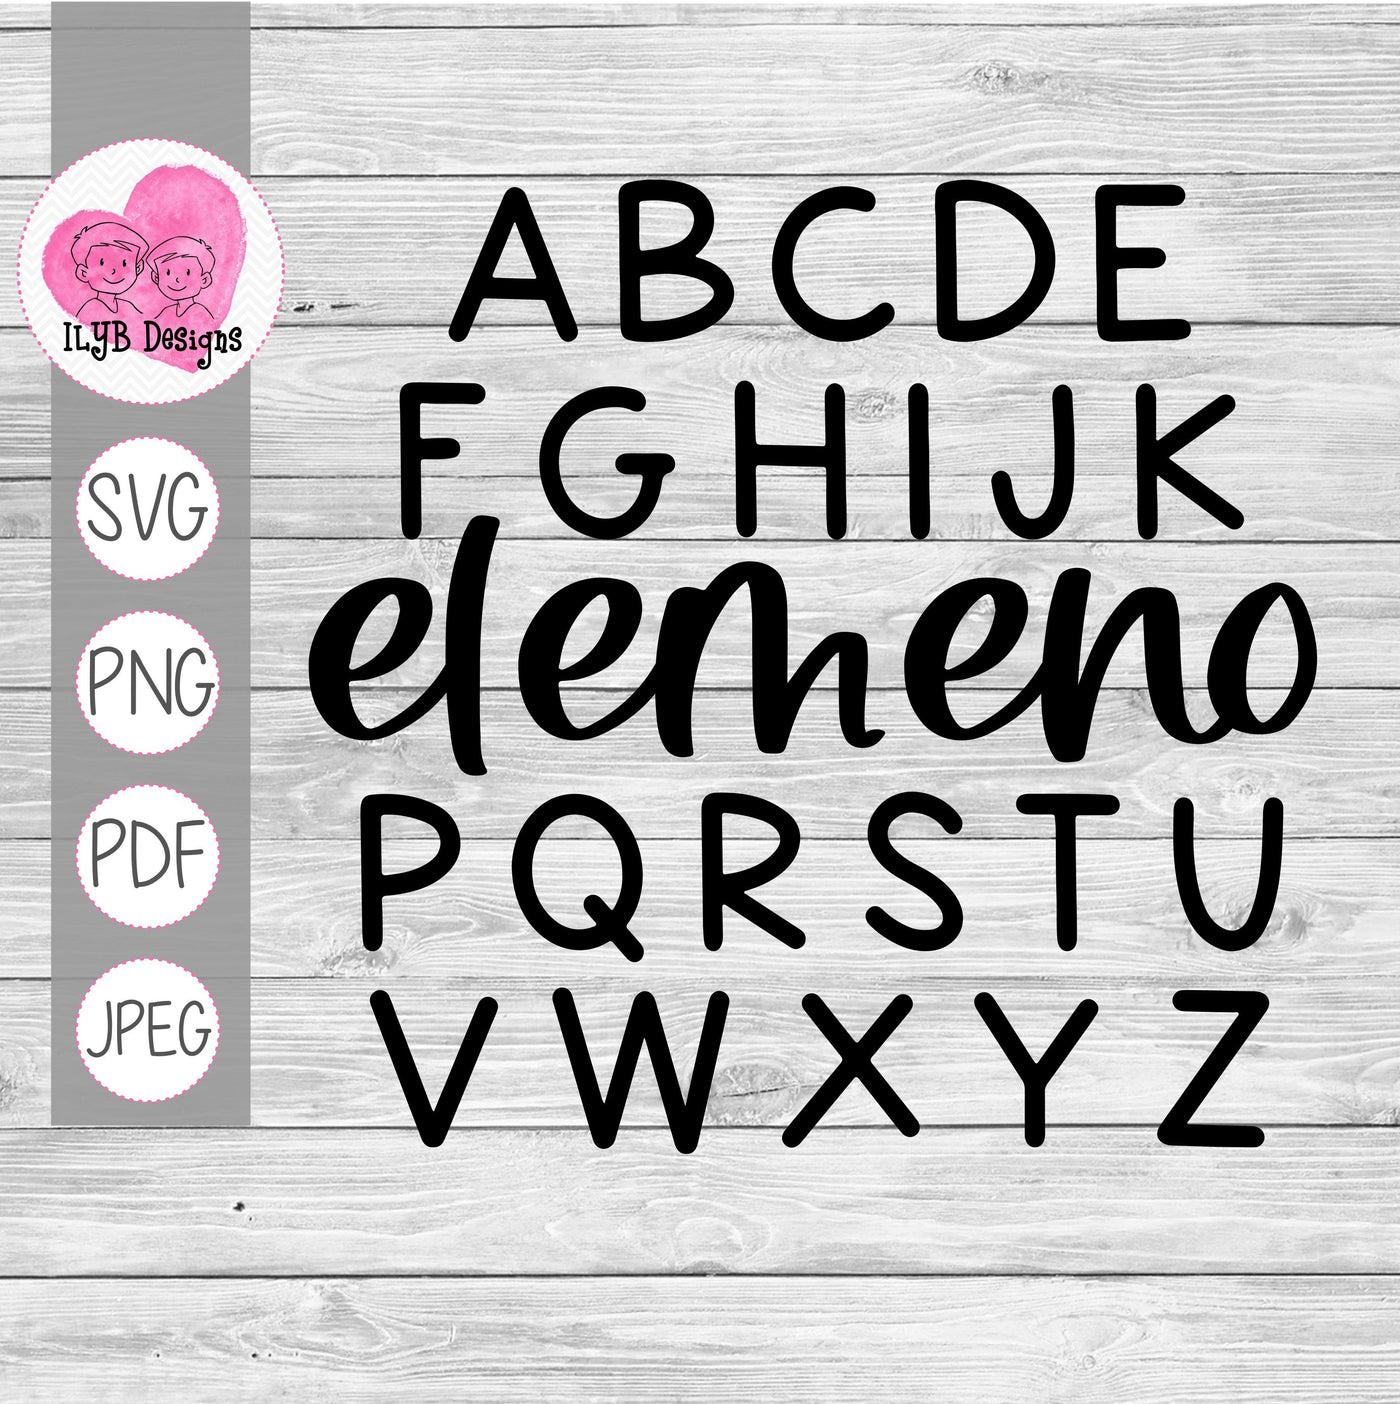 Alphabet Elemeno P Svg | Back to School Teacher Svg